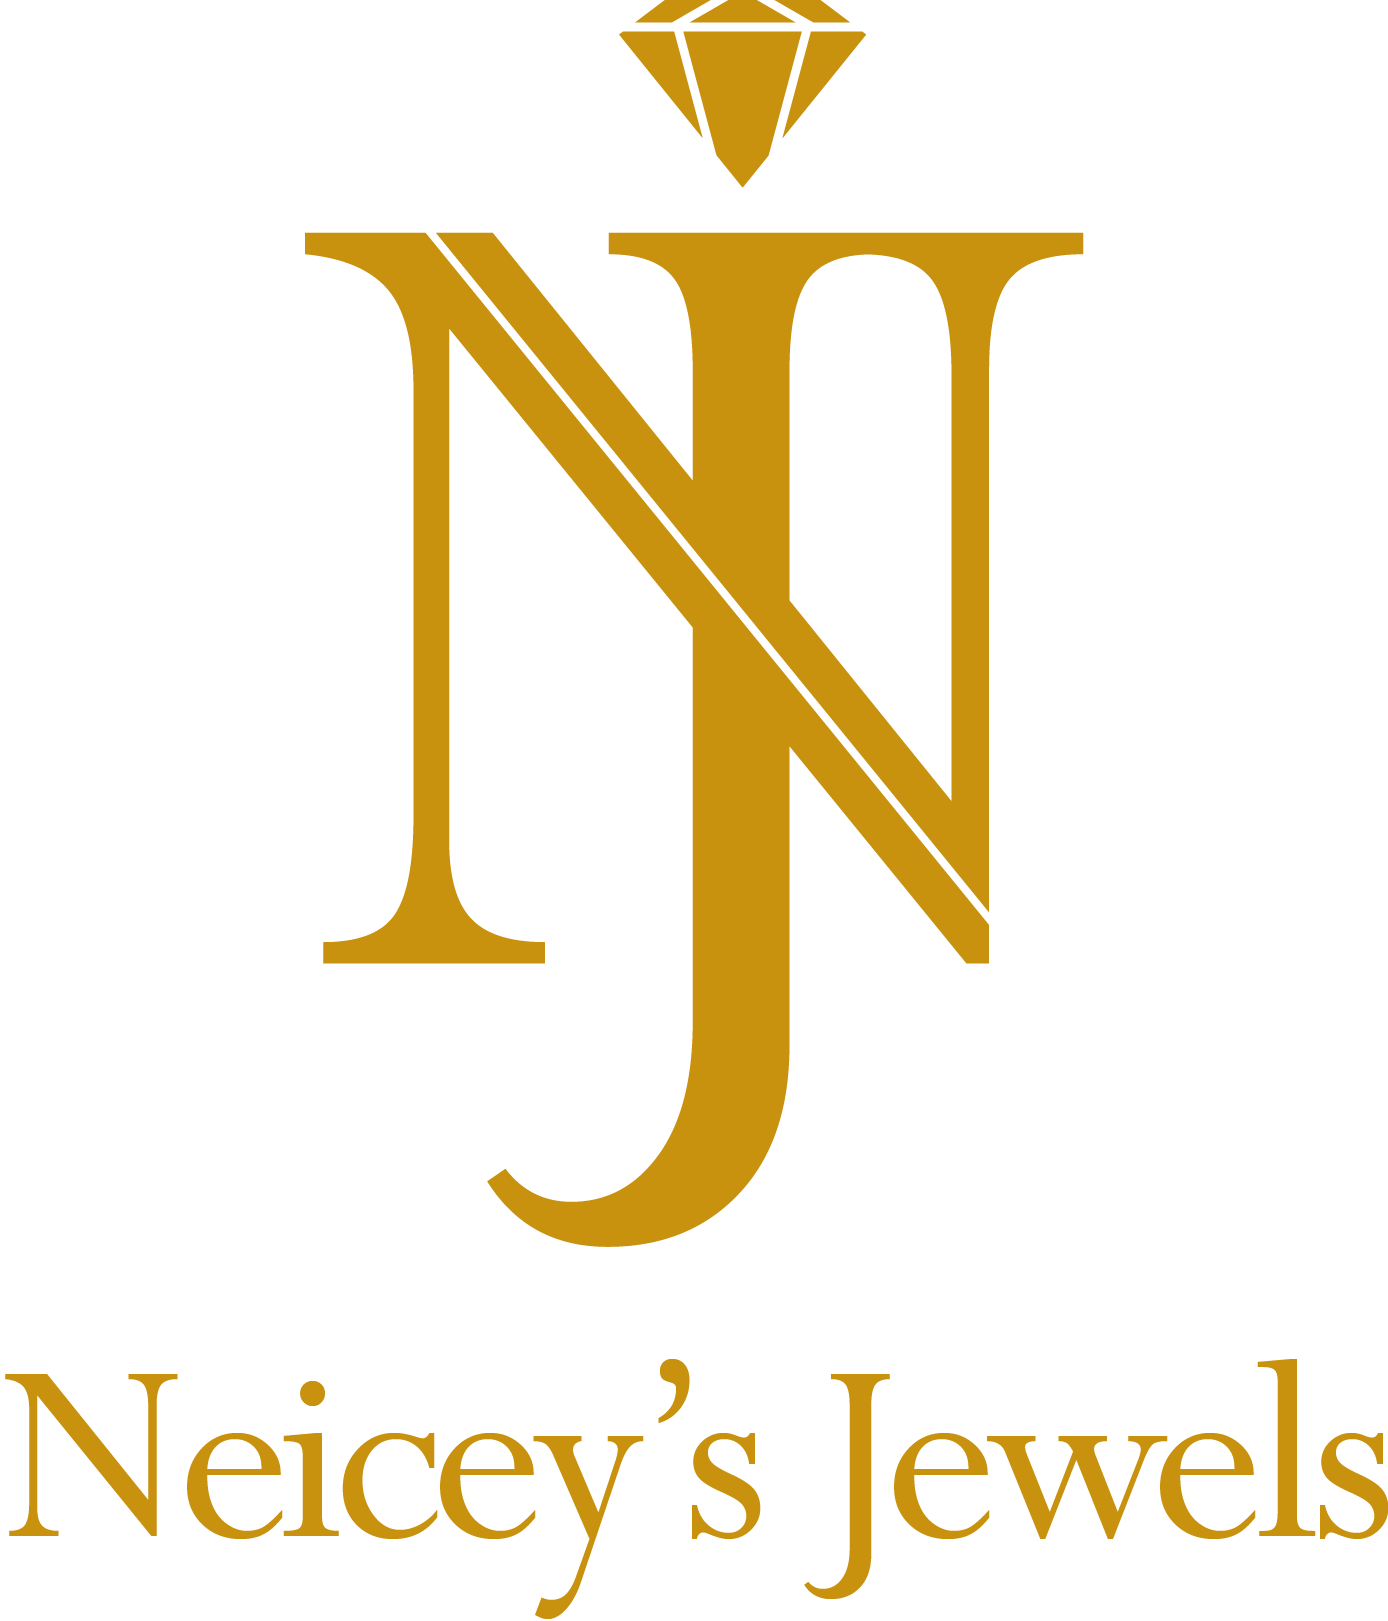 NJ Logo - Nj Logos